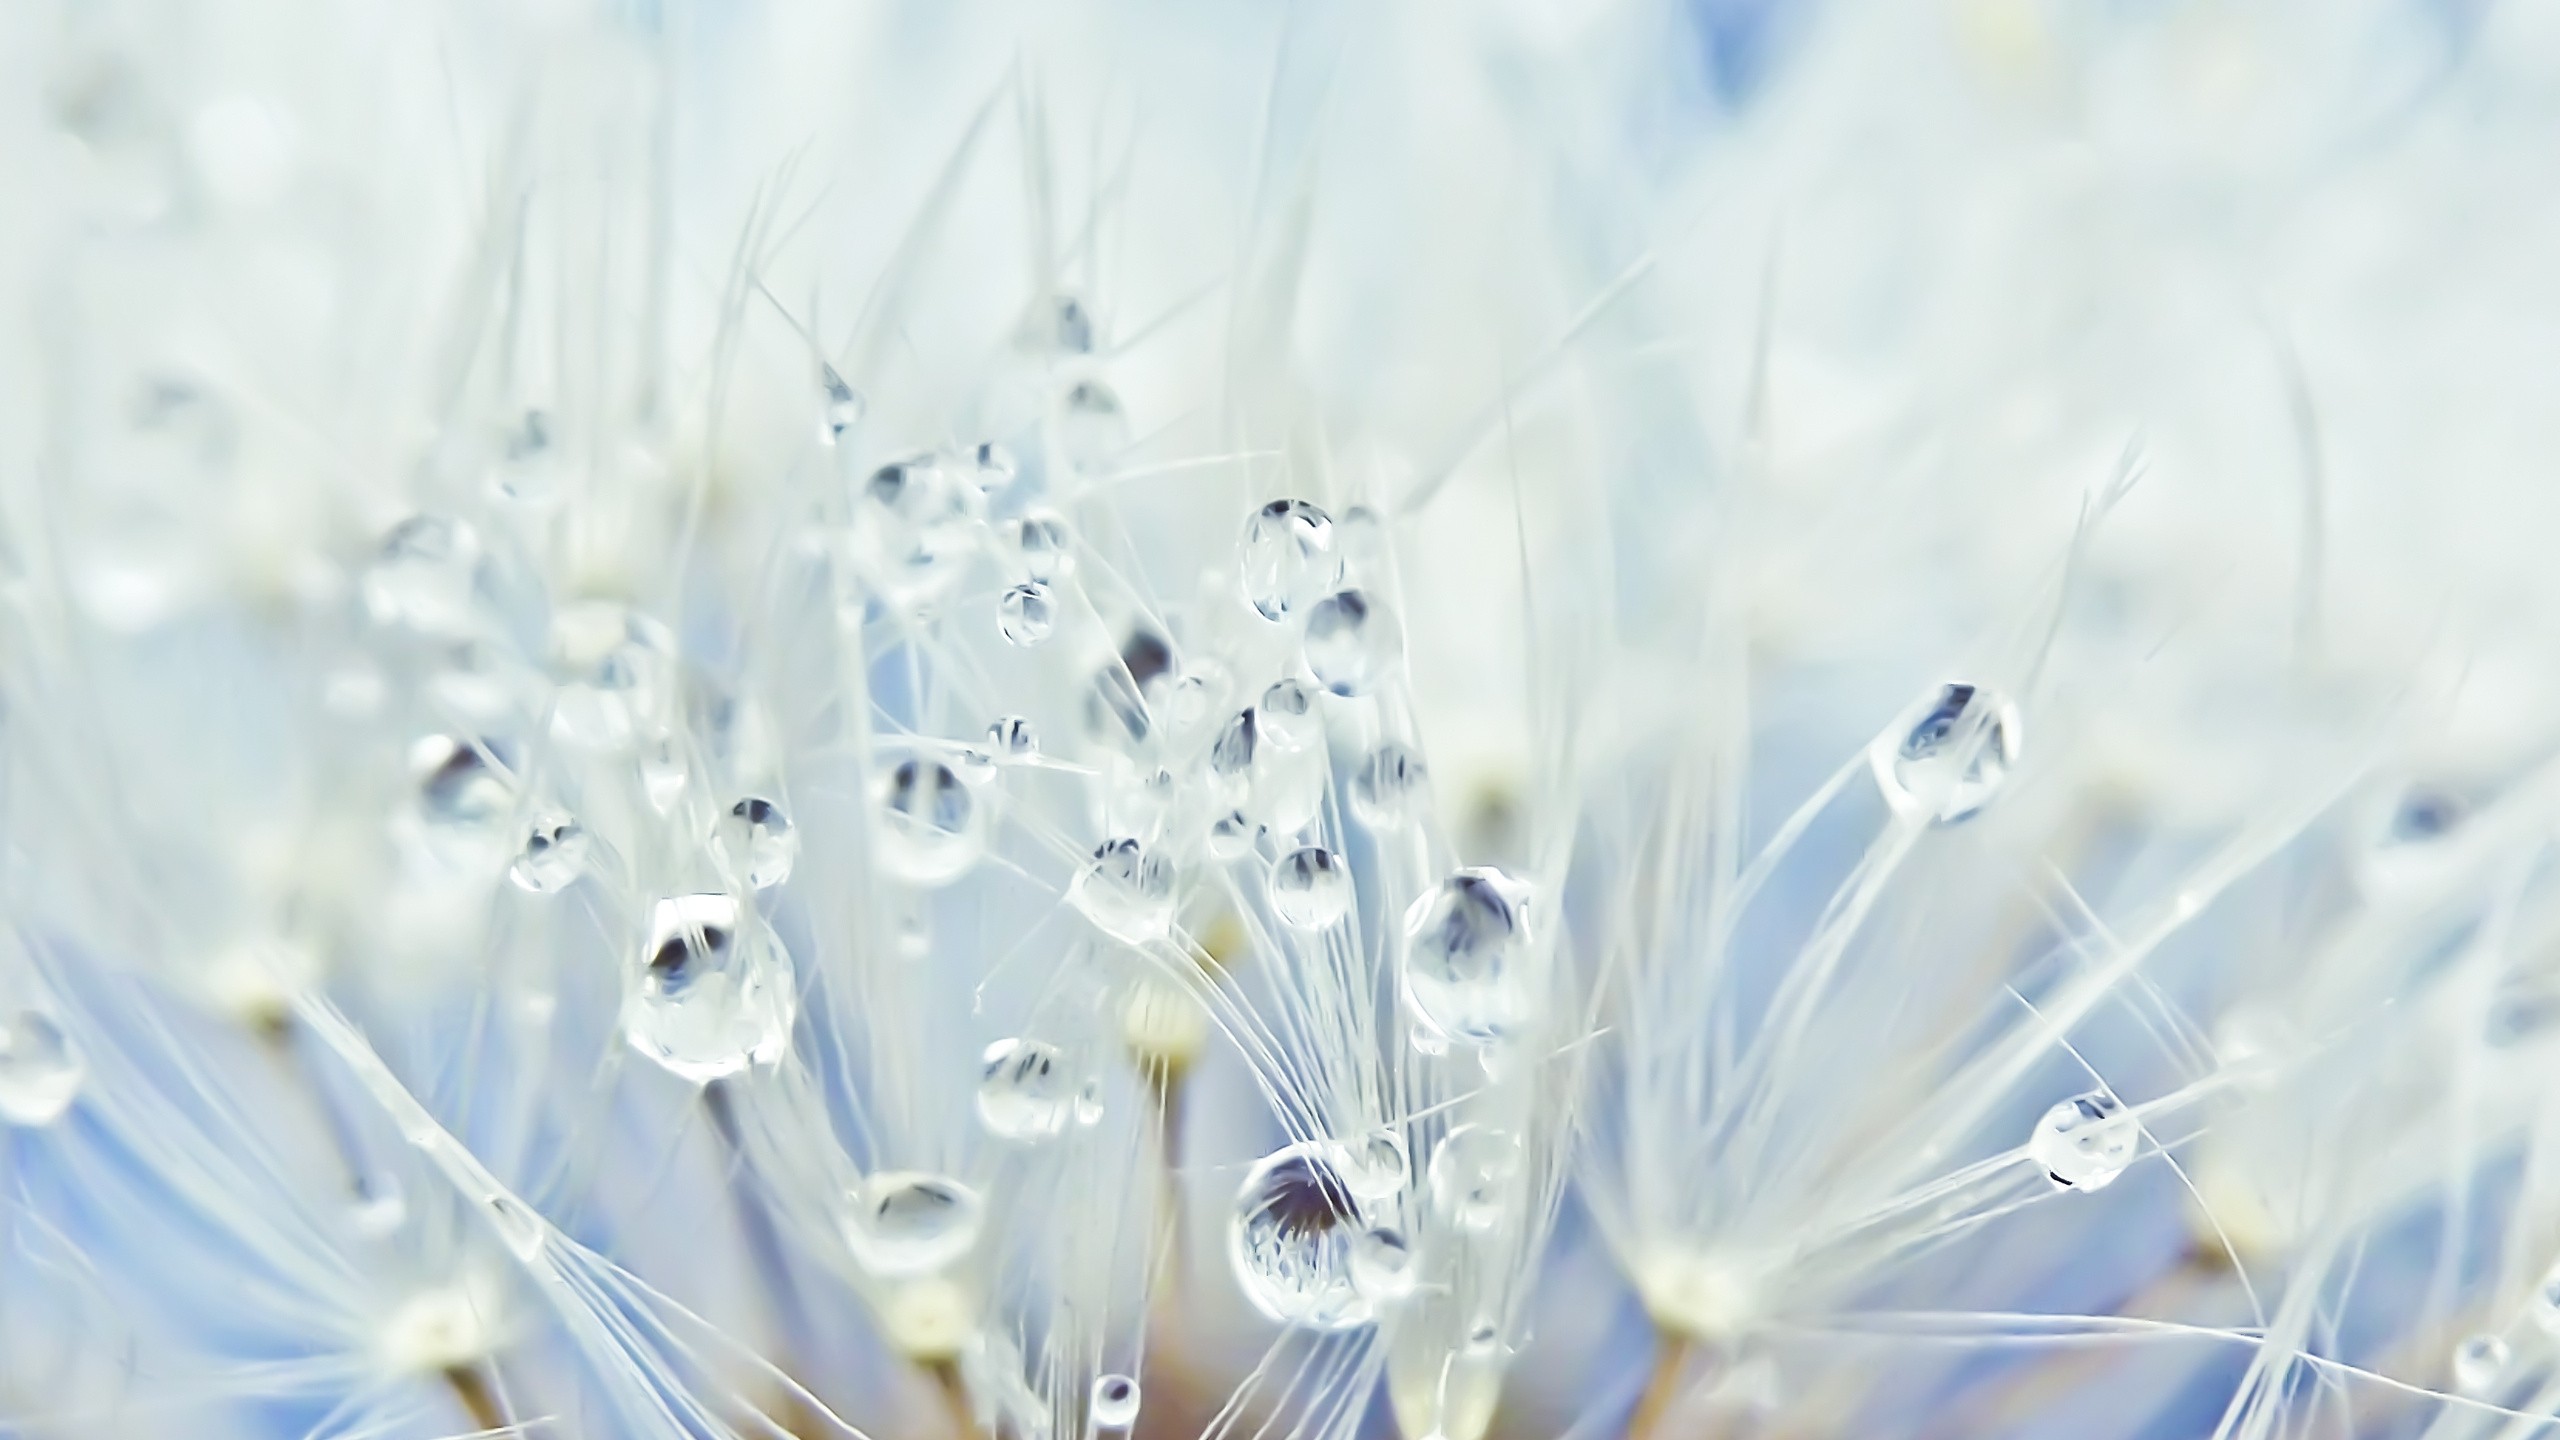 General 2560x1440 dew dandelion water drops plants flowers macro outdoors closeup